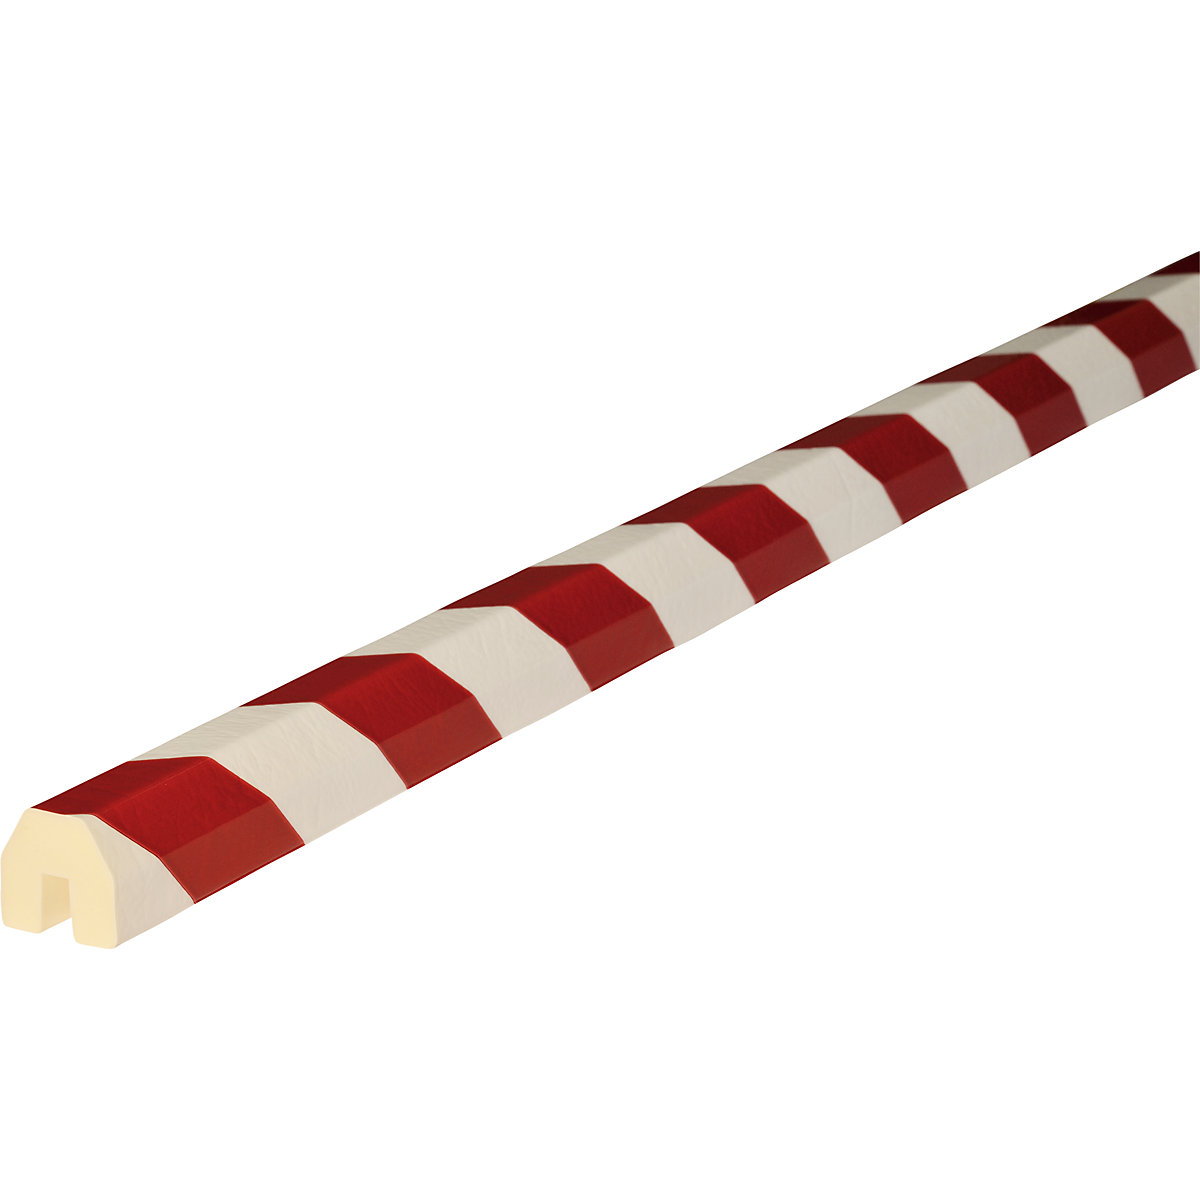 Knuffi®-randbescherming – SHG, type BB, stuk van 1 m, rood/wit-17